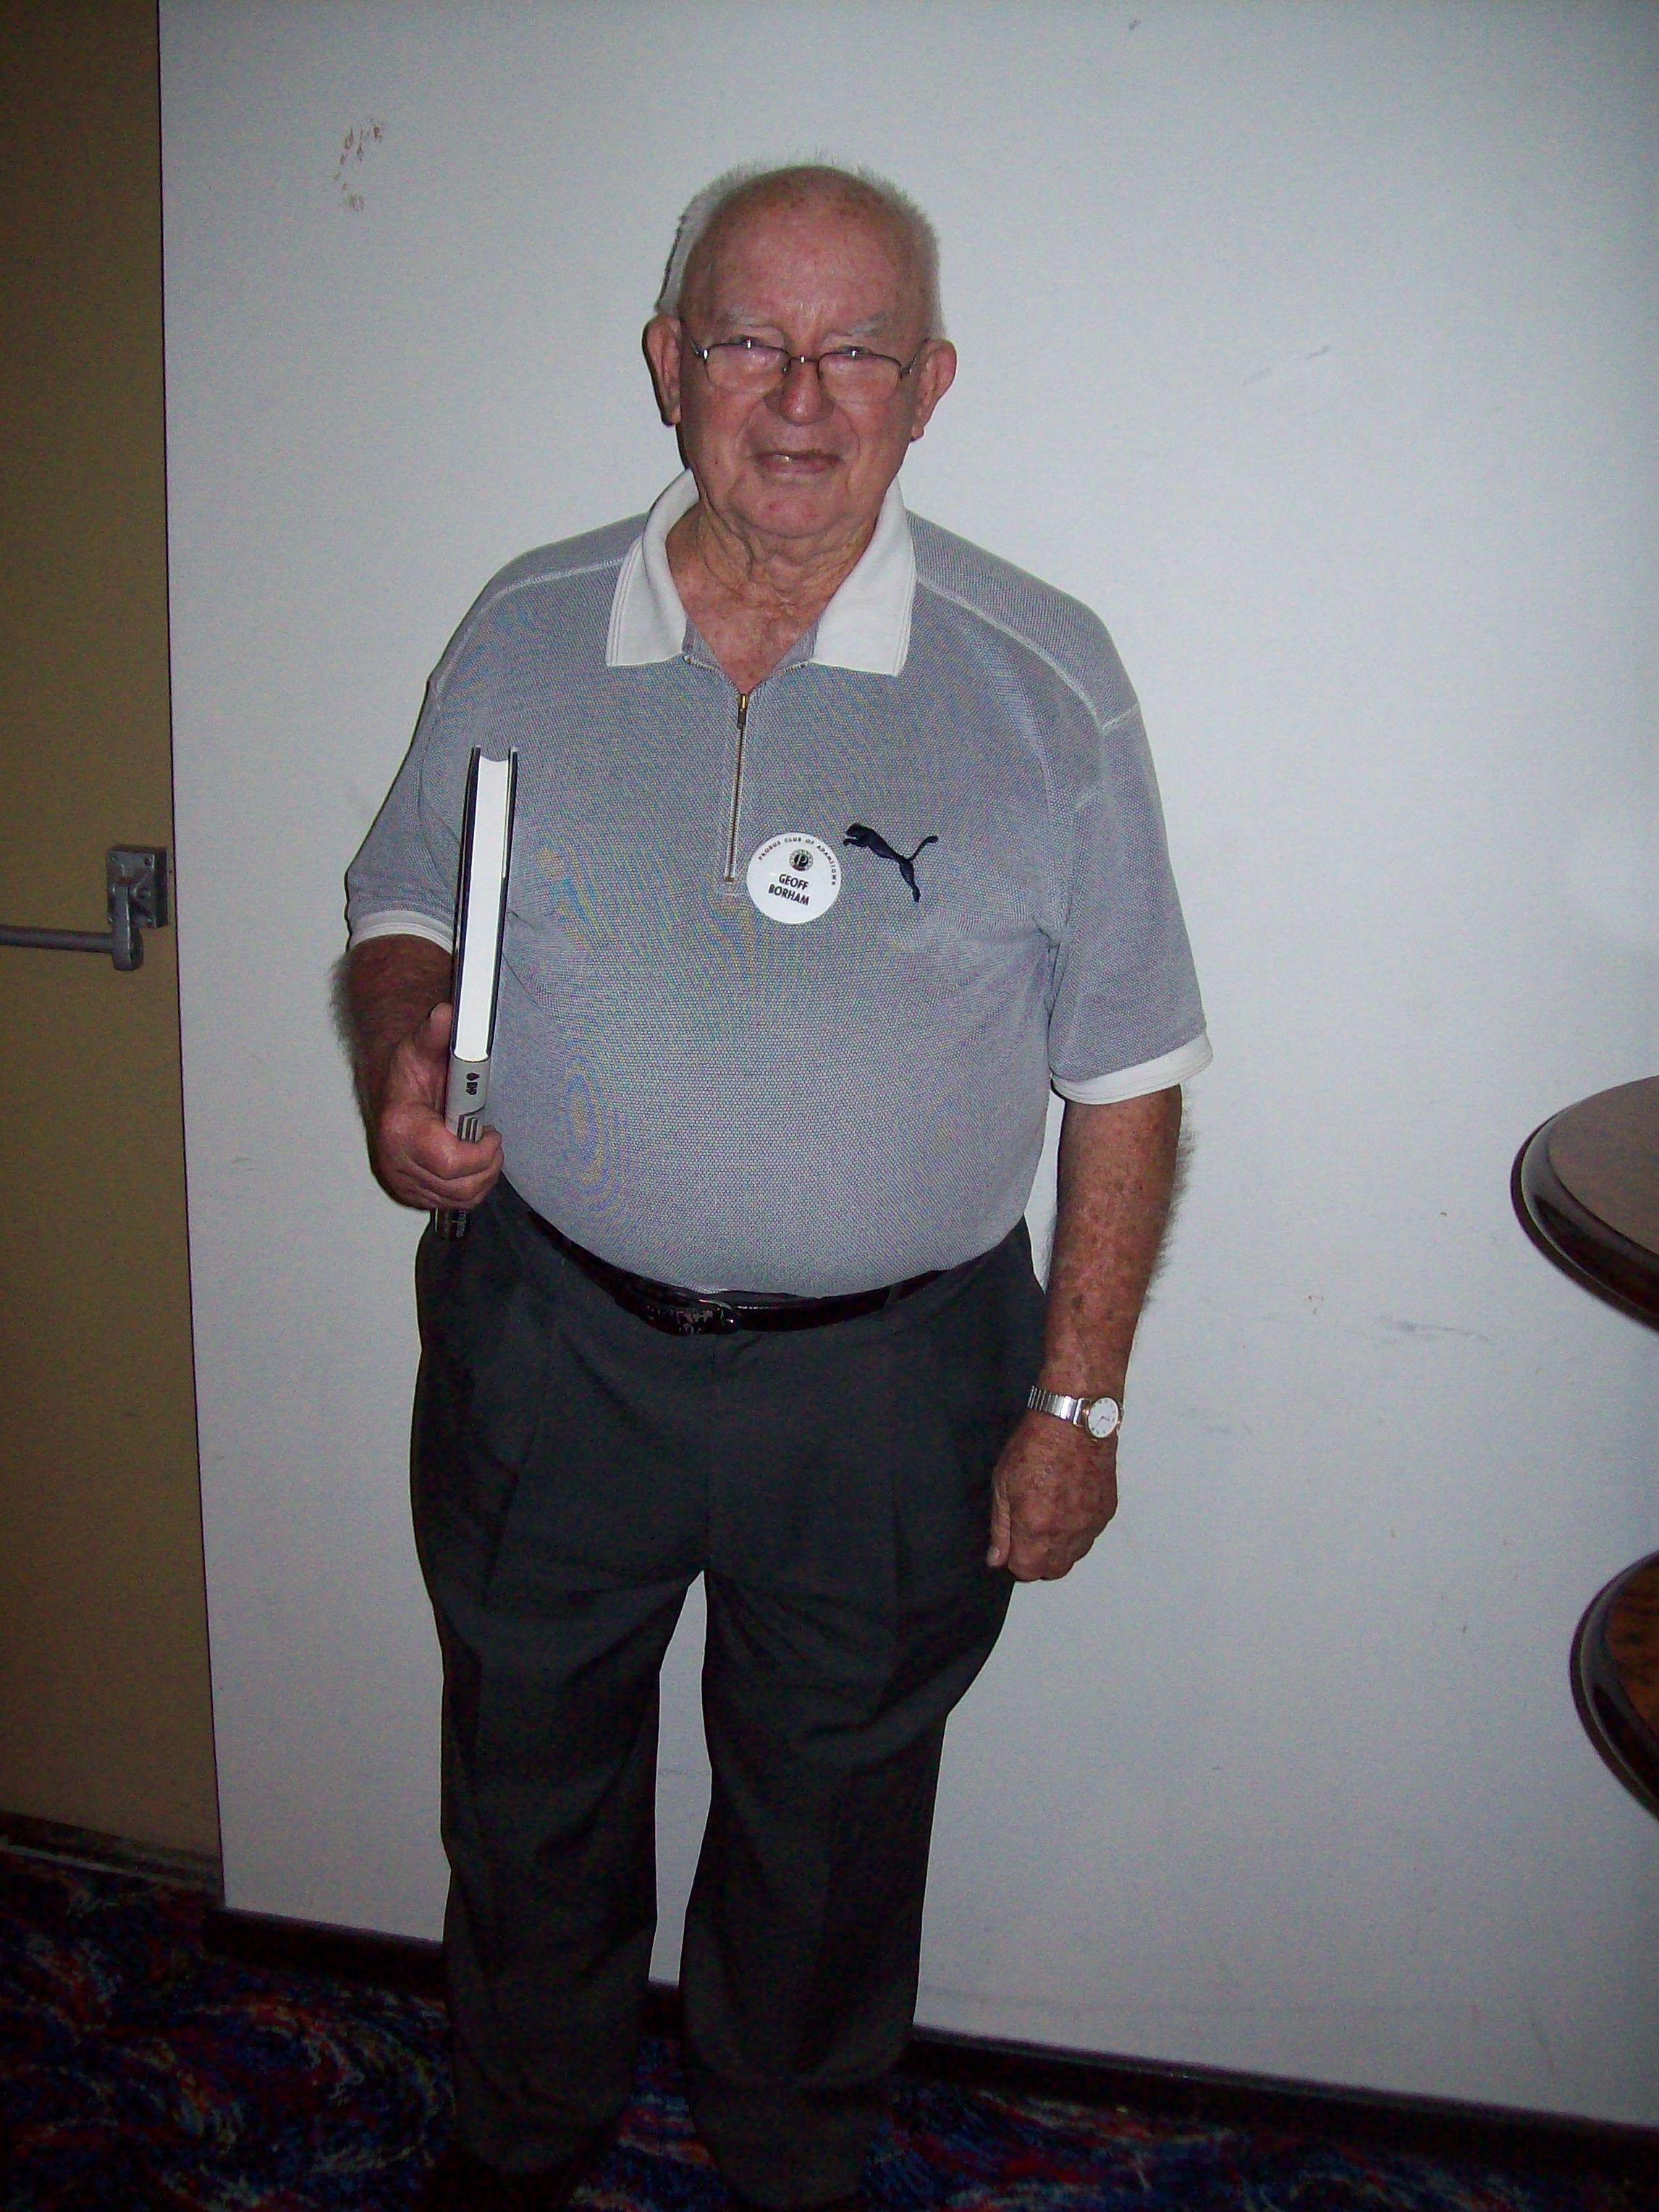 Doug, Newcastle BHP Office, Doug is a member of Adamstown Probus Club, 
this "Man of Steel" is 90 years old.